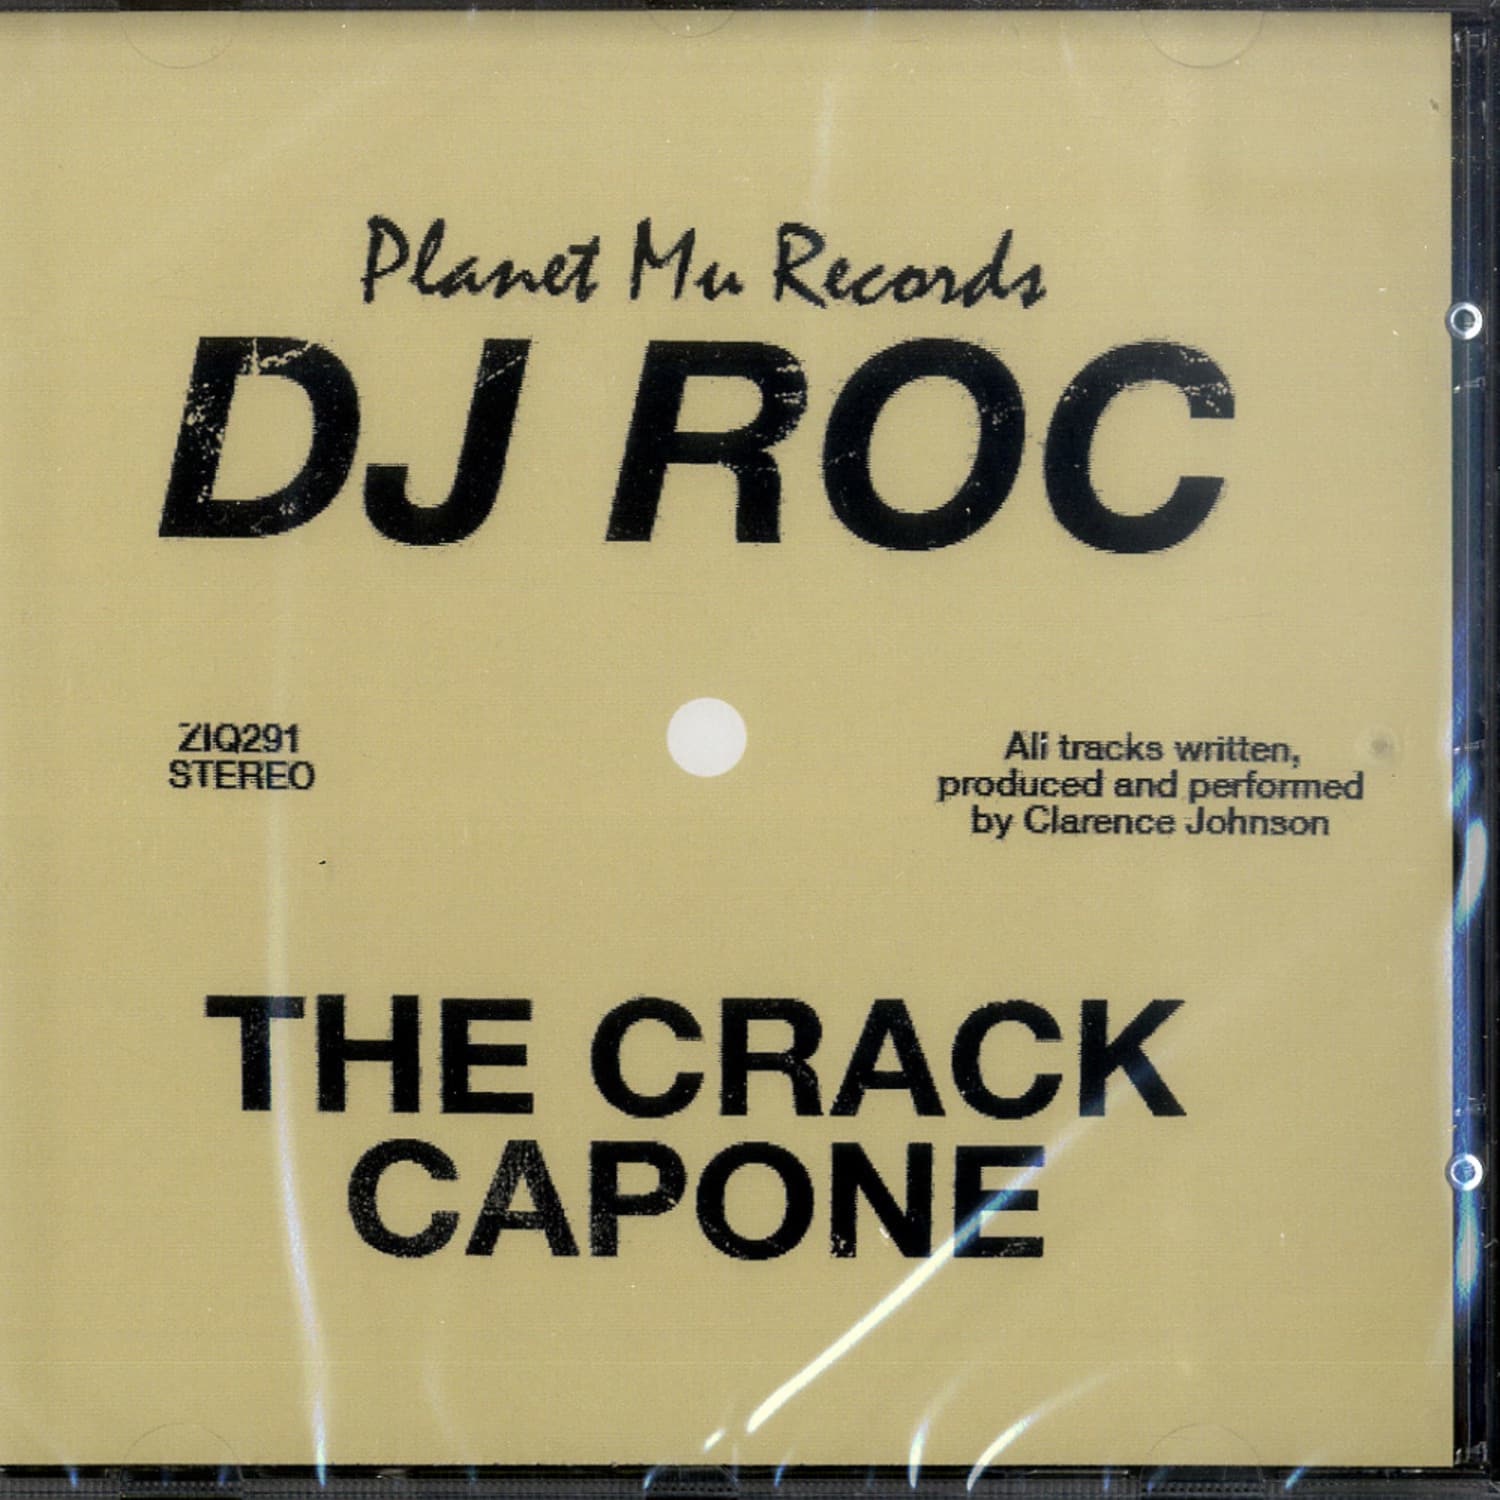 DJ Roc - THE CRACK CAPONE 